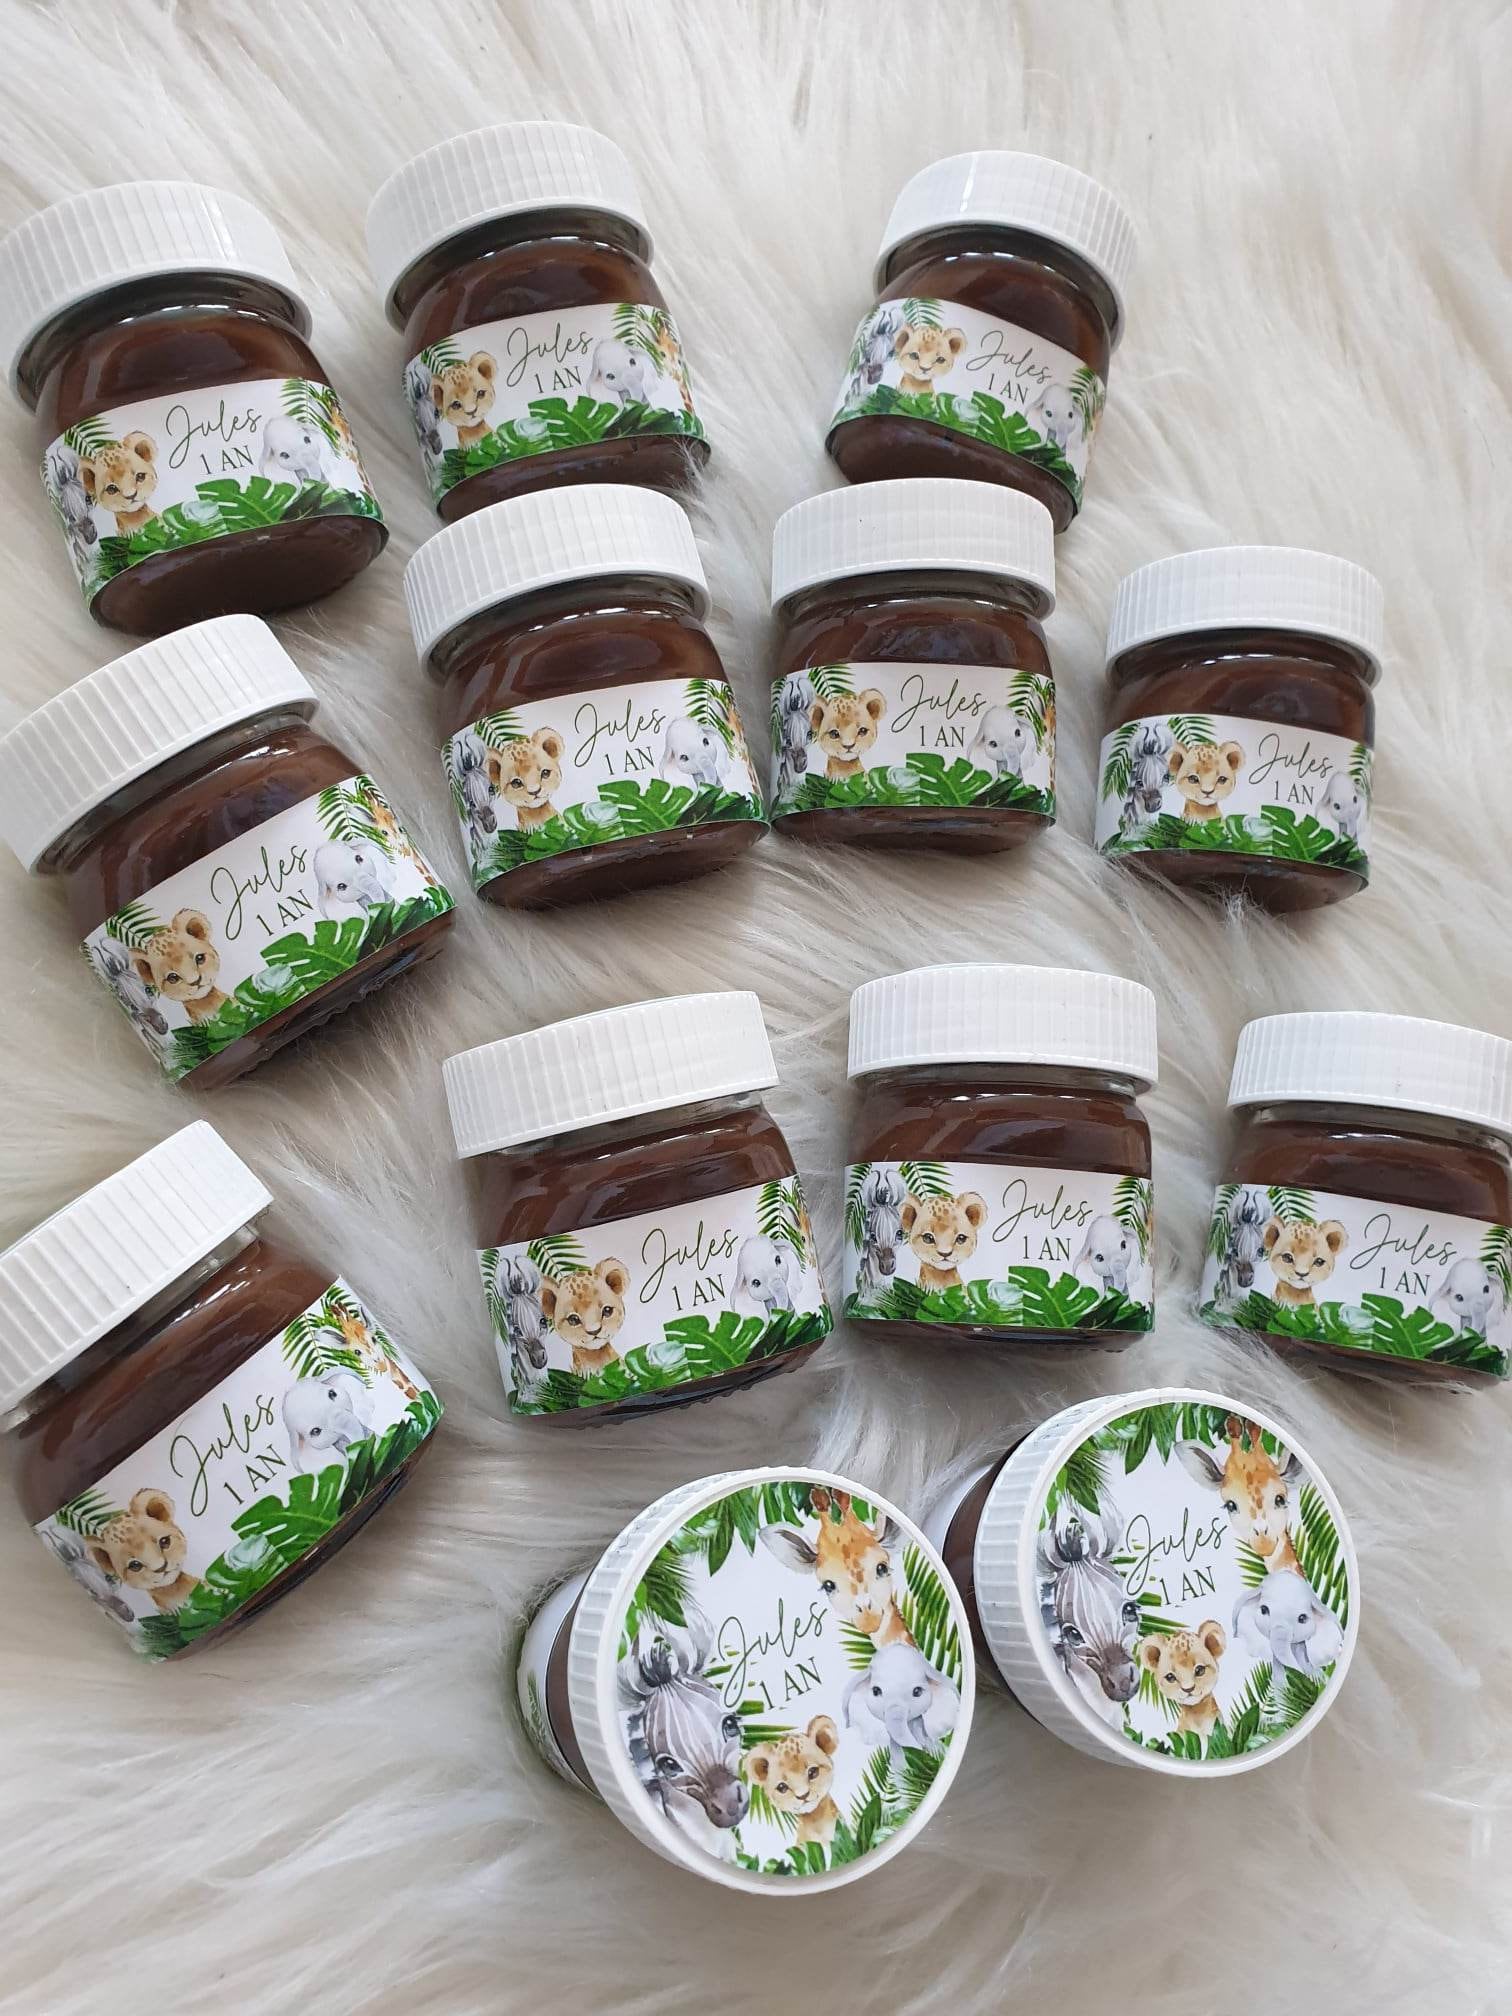 Mini Nutella Jar 25g - All Boxed Out AU